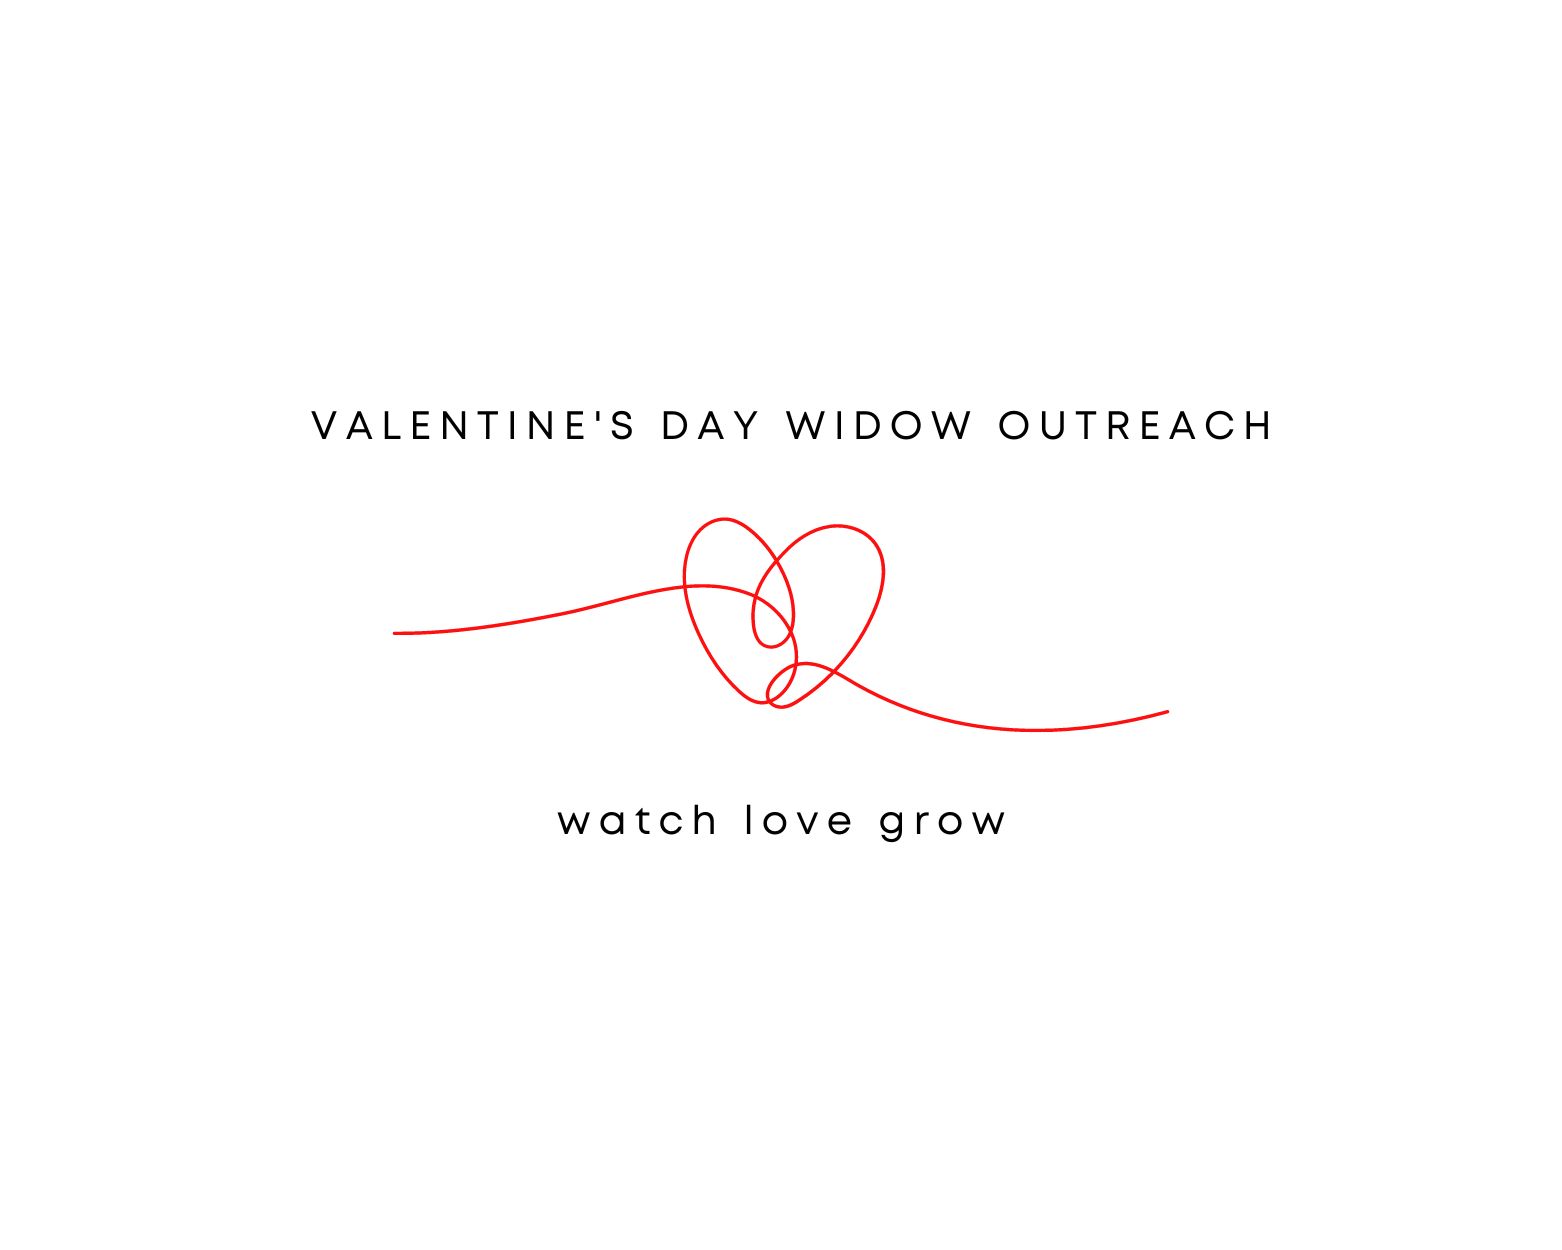 Valentine's Day Widow Outreach - Watch Love Grow